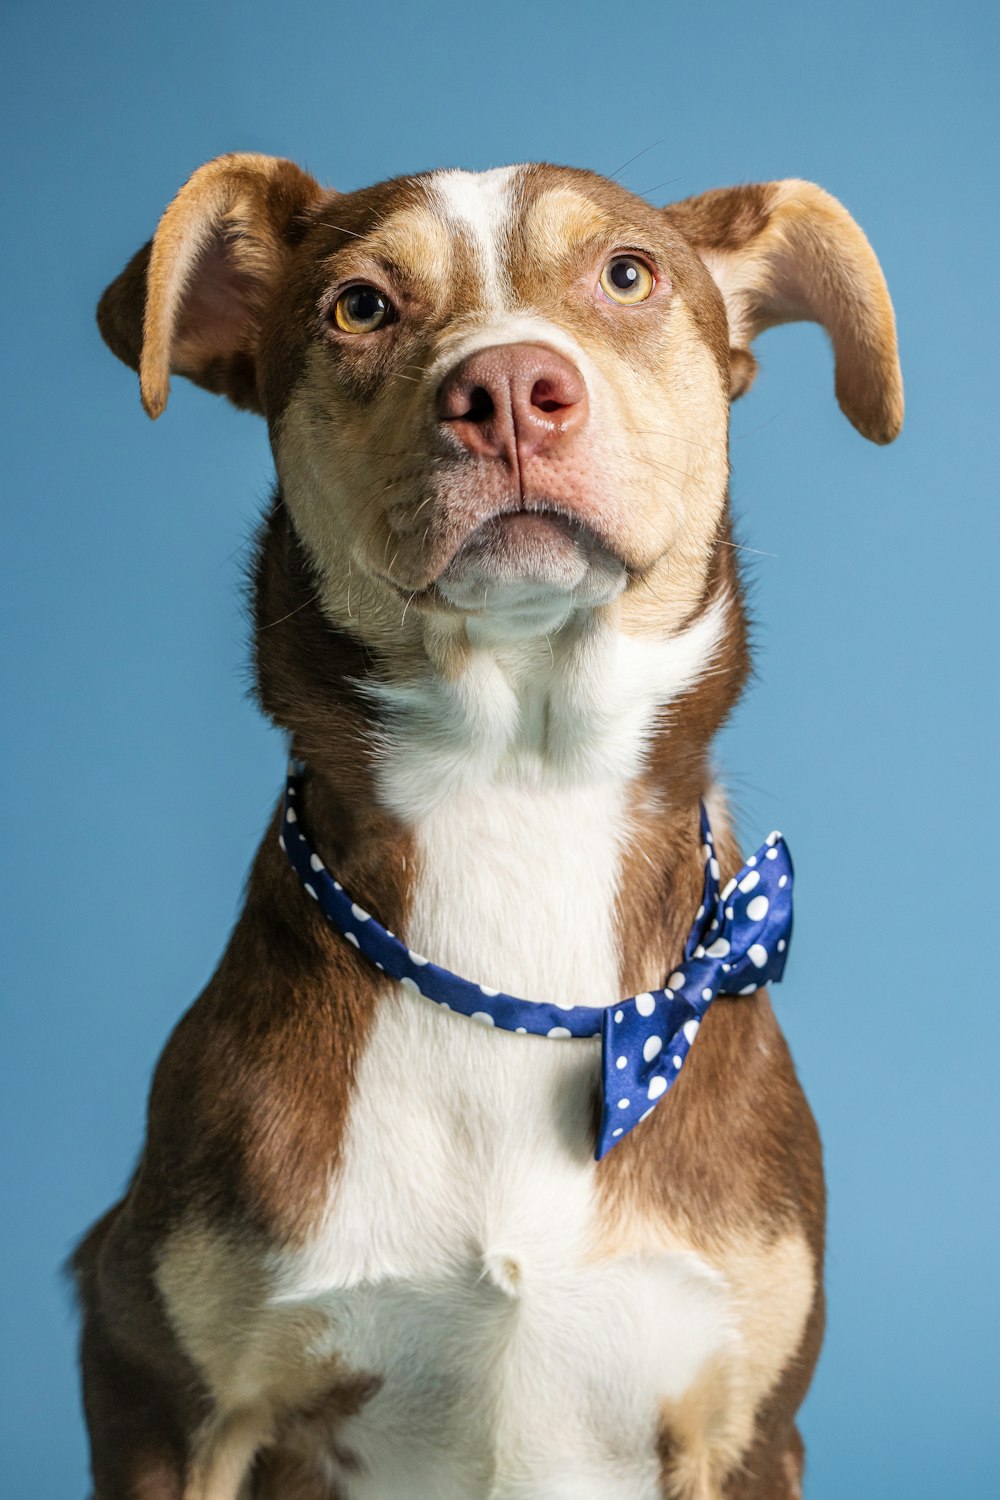 a dog with a blue collar